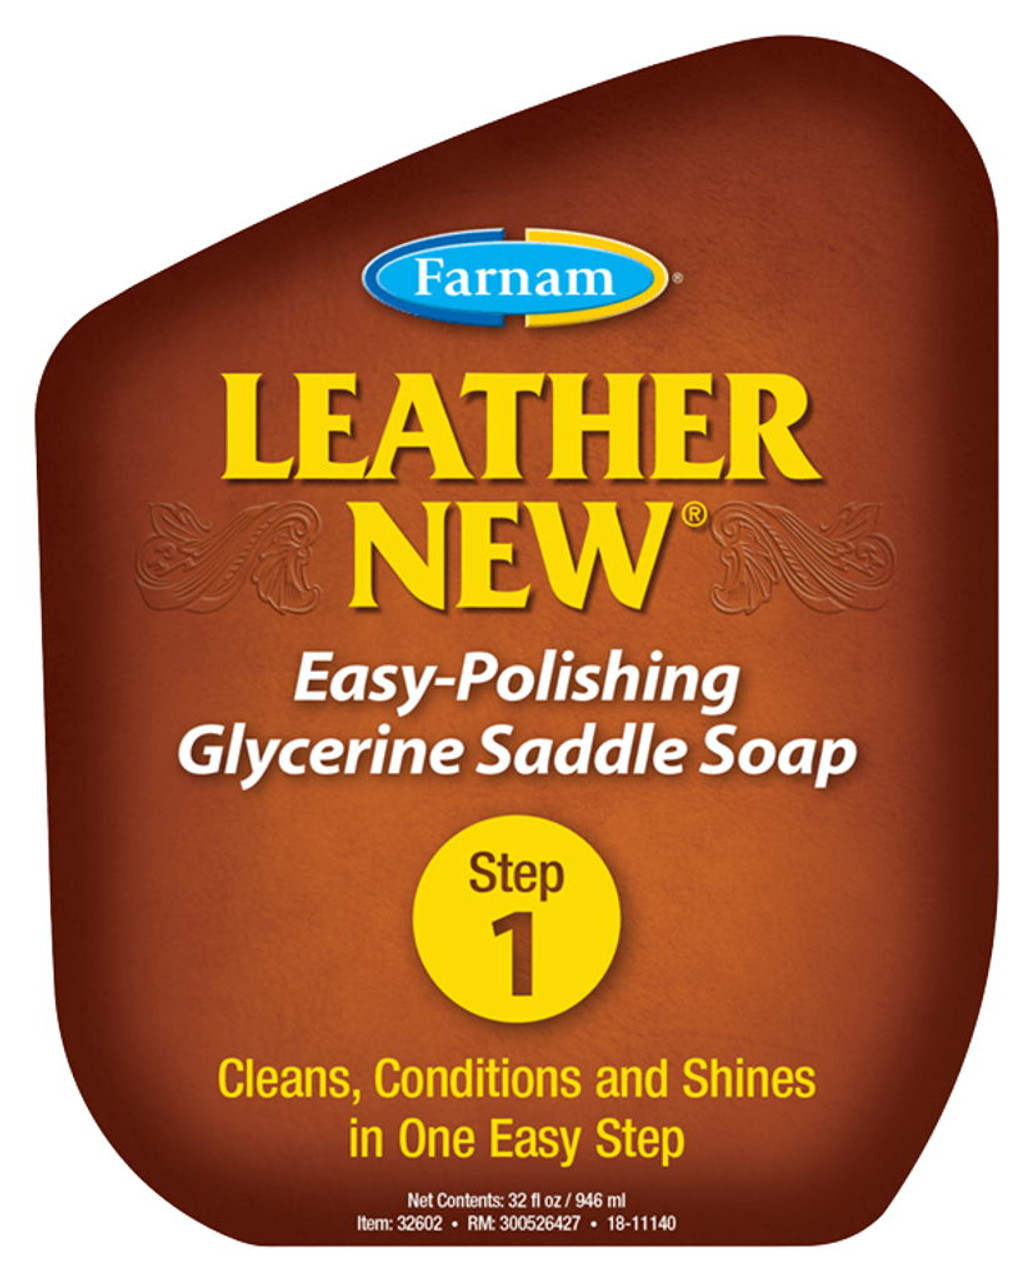 Farnam Leather New Easy-Polishing Glycerine Saddle Soap and